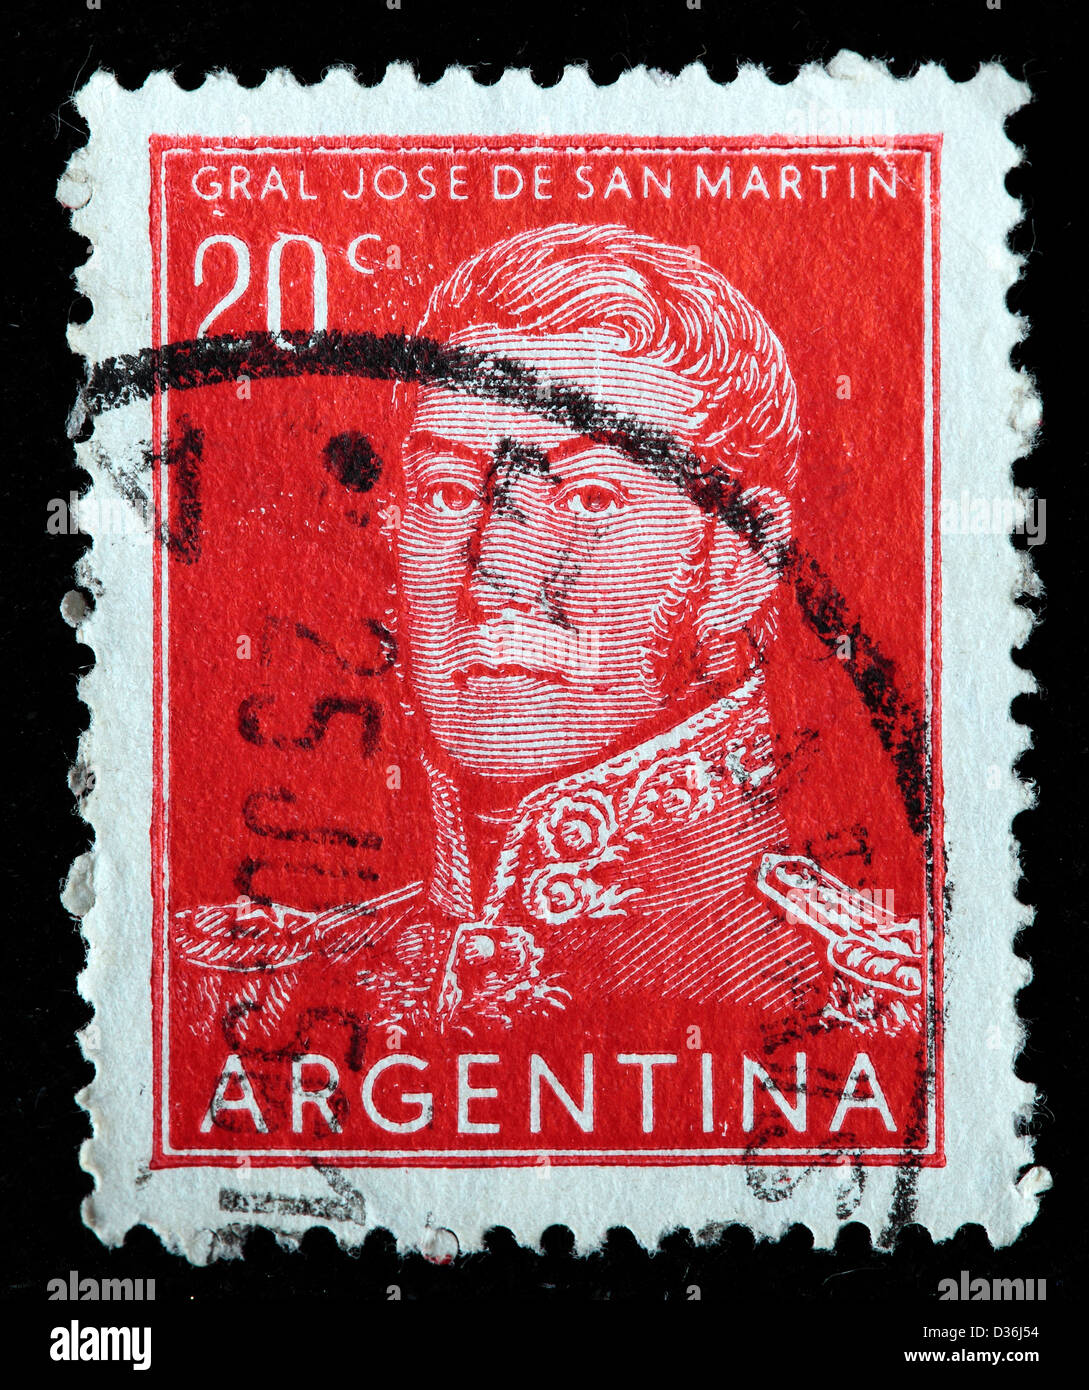 General Jose de San Martin, postage stamp, Argentina, 1954 Stock Photo